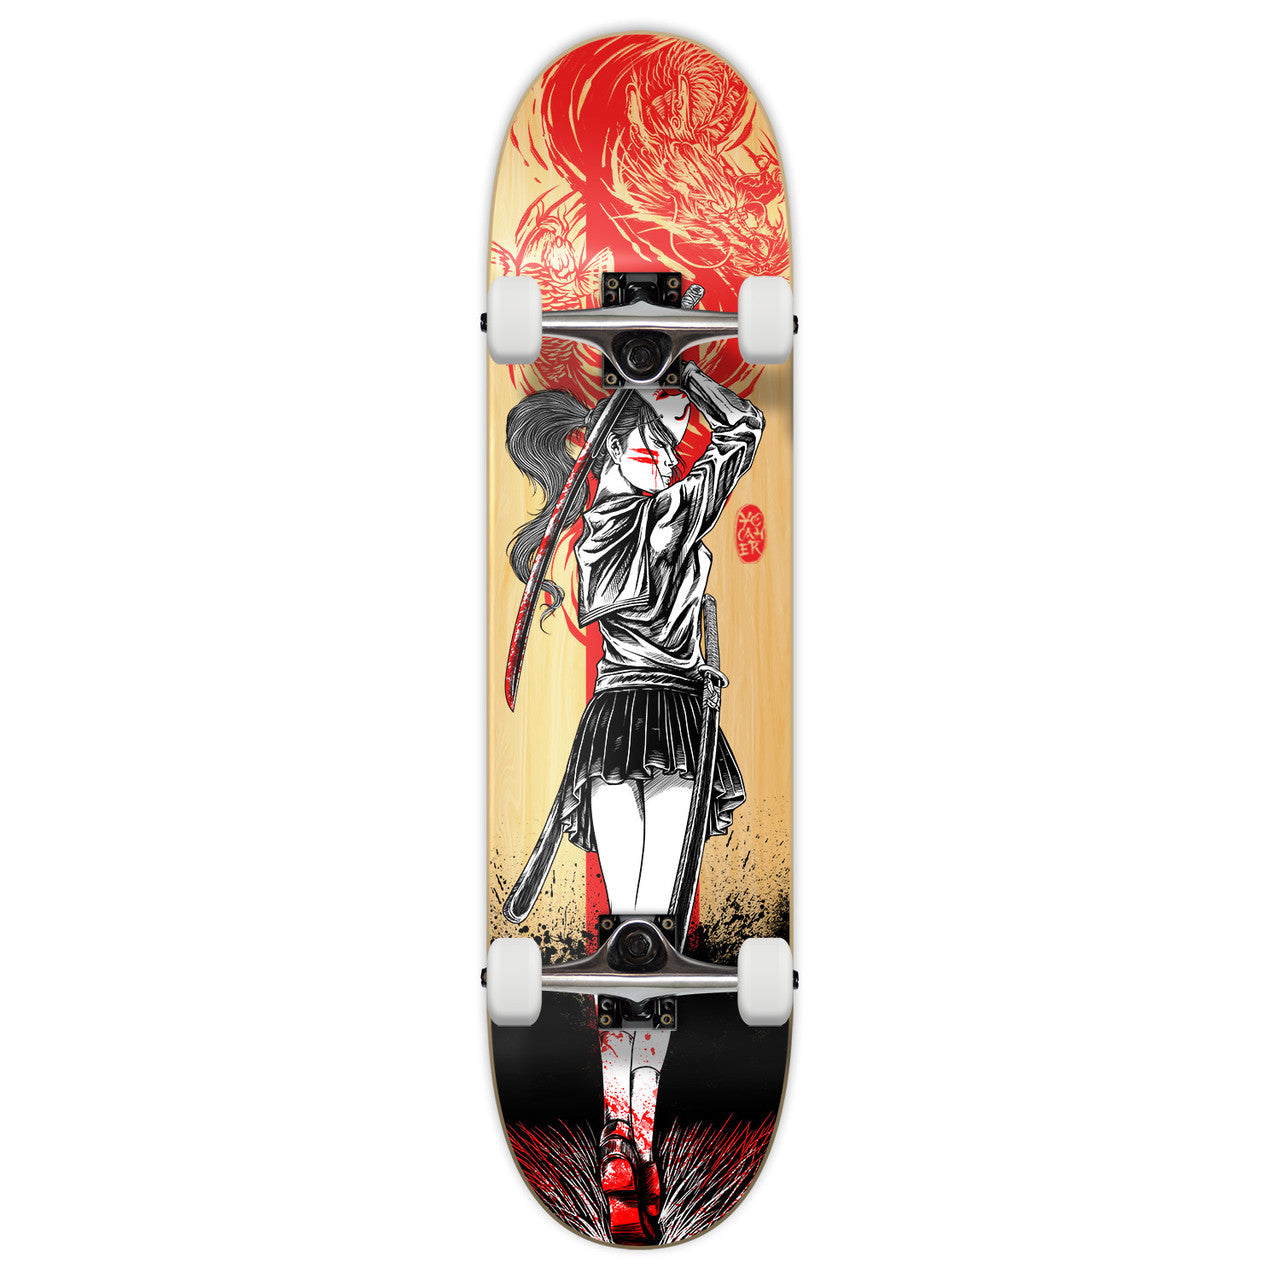 Yocaher Complete Skateboard 7.75" - Samurai Series - Girl Samurai Red Dragon